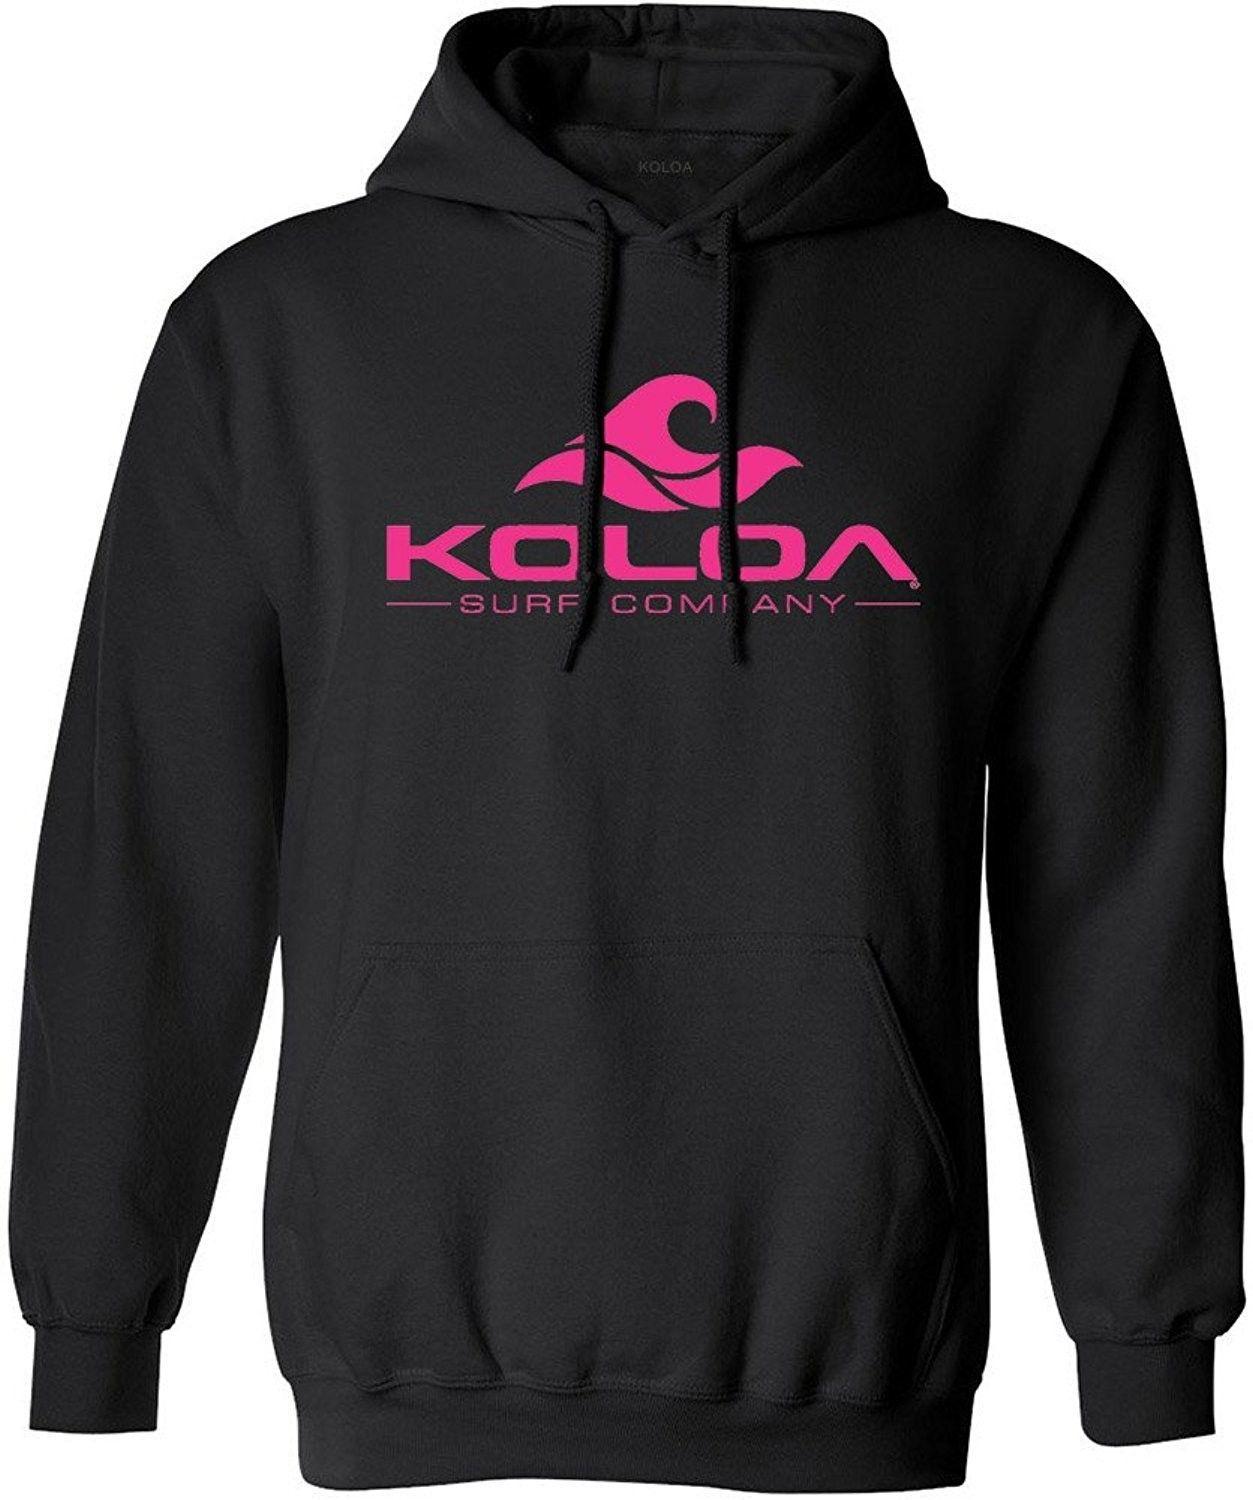 Fashion with a Black Wave Logo - Koloa Surf Wave Logo Hoodies - Hooded Sweatshirts. In Sizes S-5XL ...